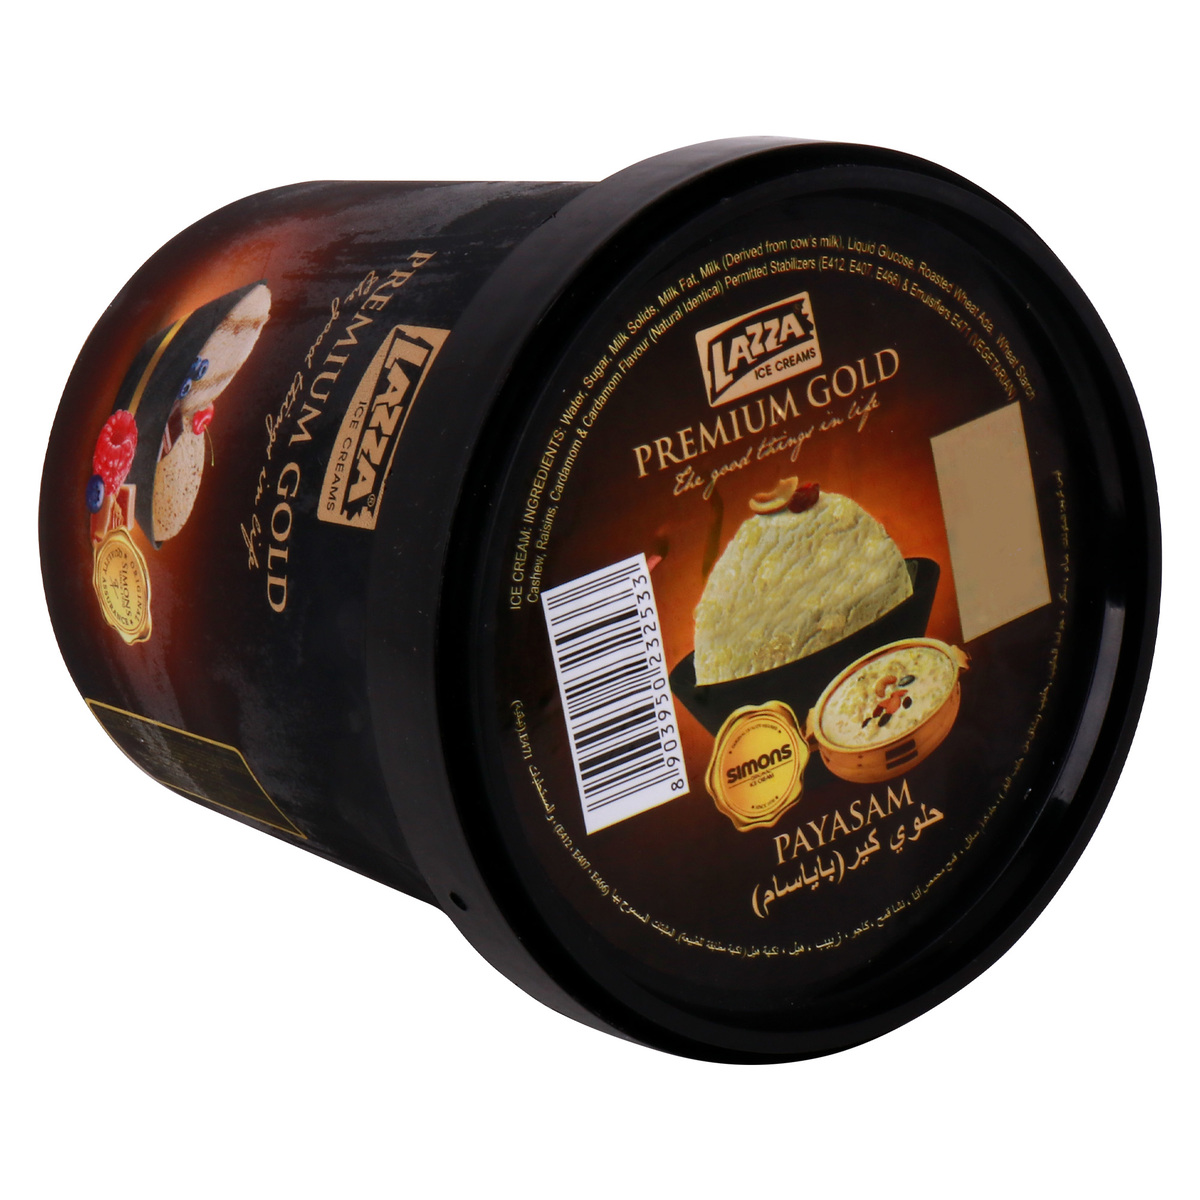 Lazza Premium Gold Payasam Ice Cream 1Litre